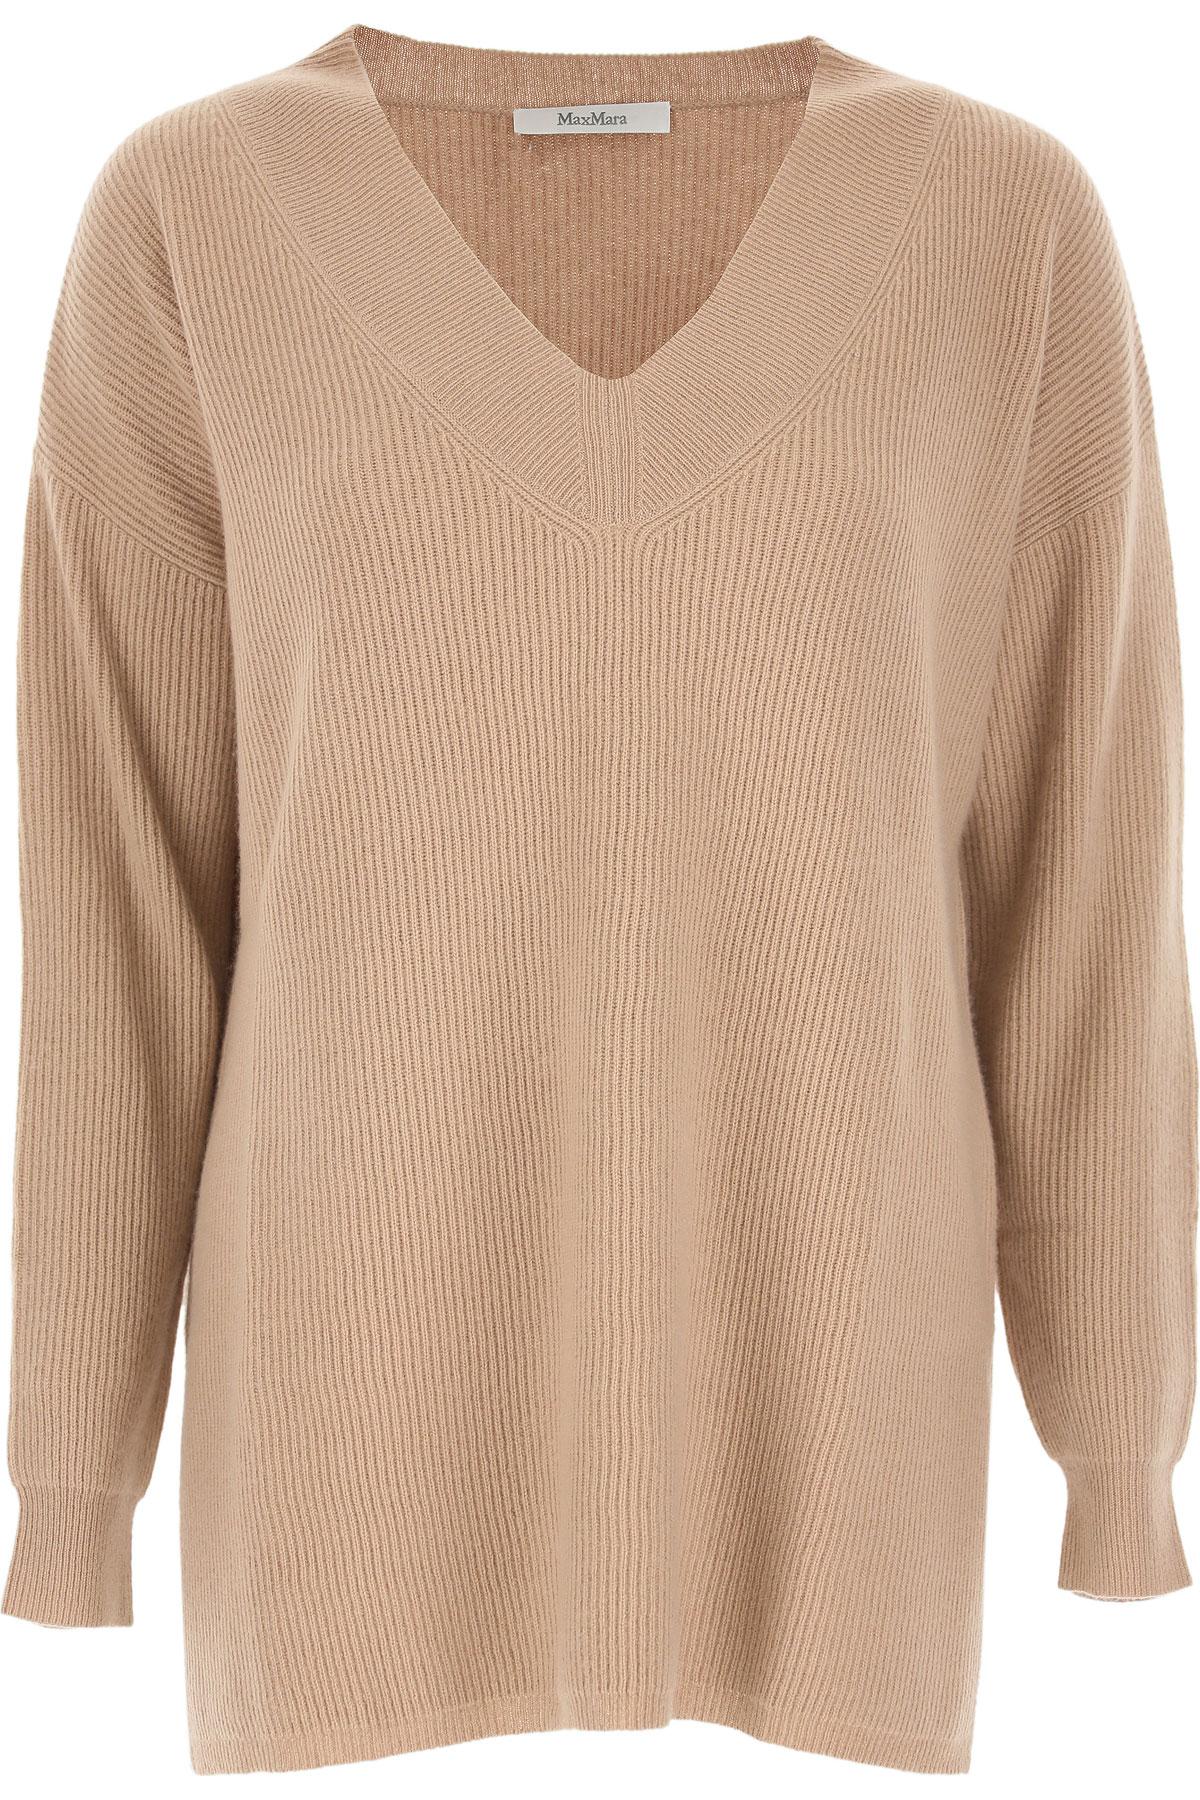 Max Mara Sweater For Women Jumper in Brown - Lyst